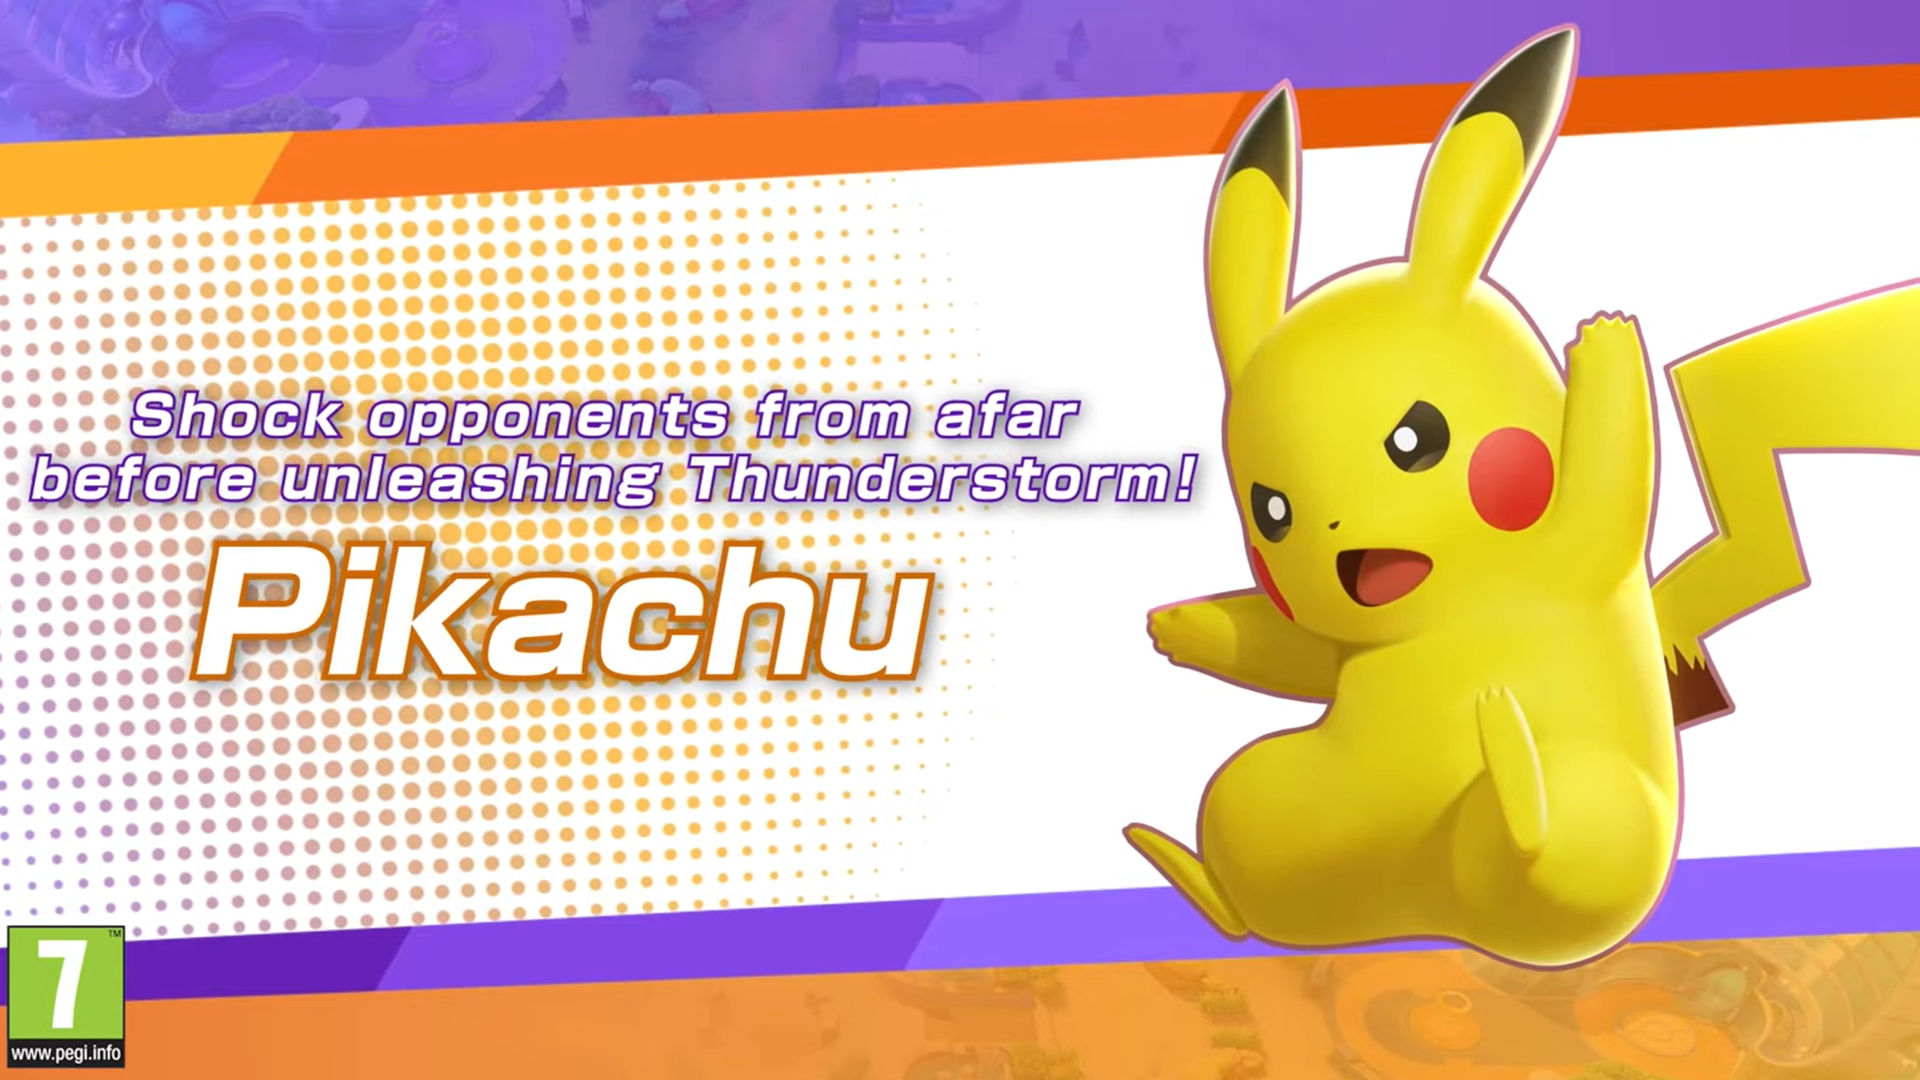 Pokémon Unite Pikachu build, abilities, and items